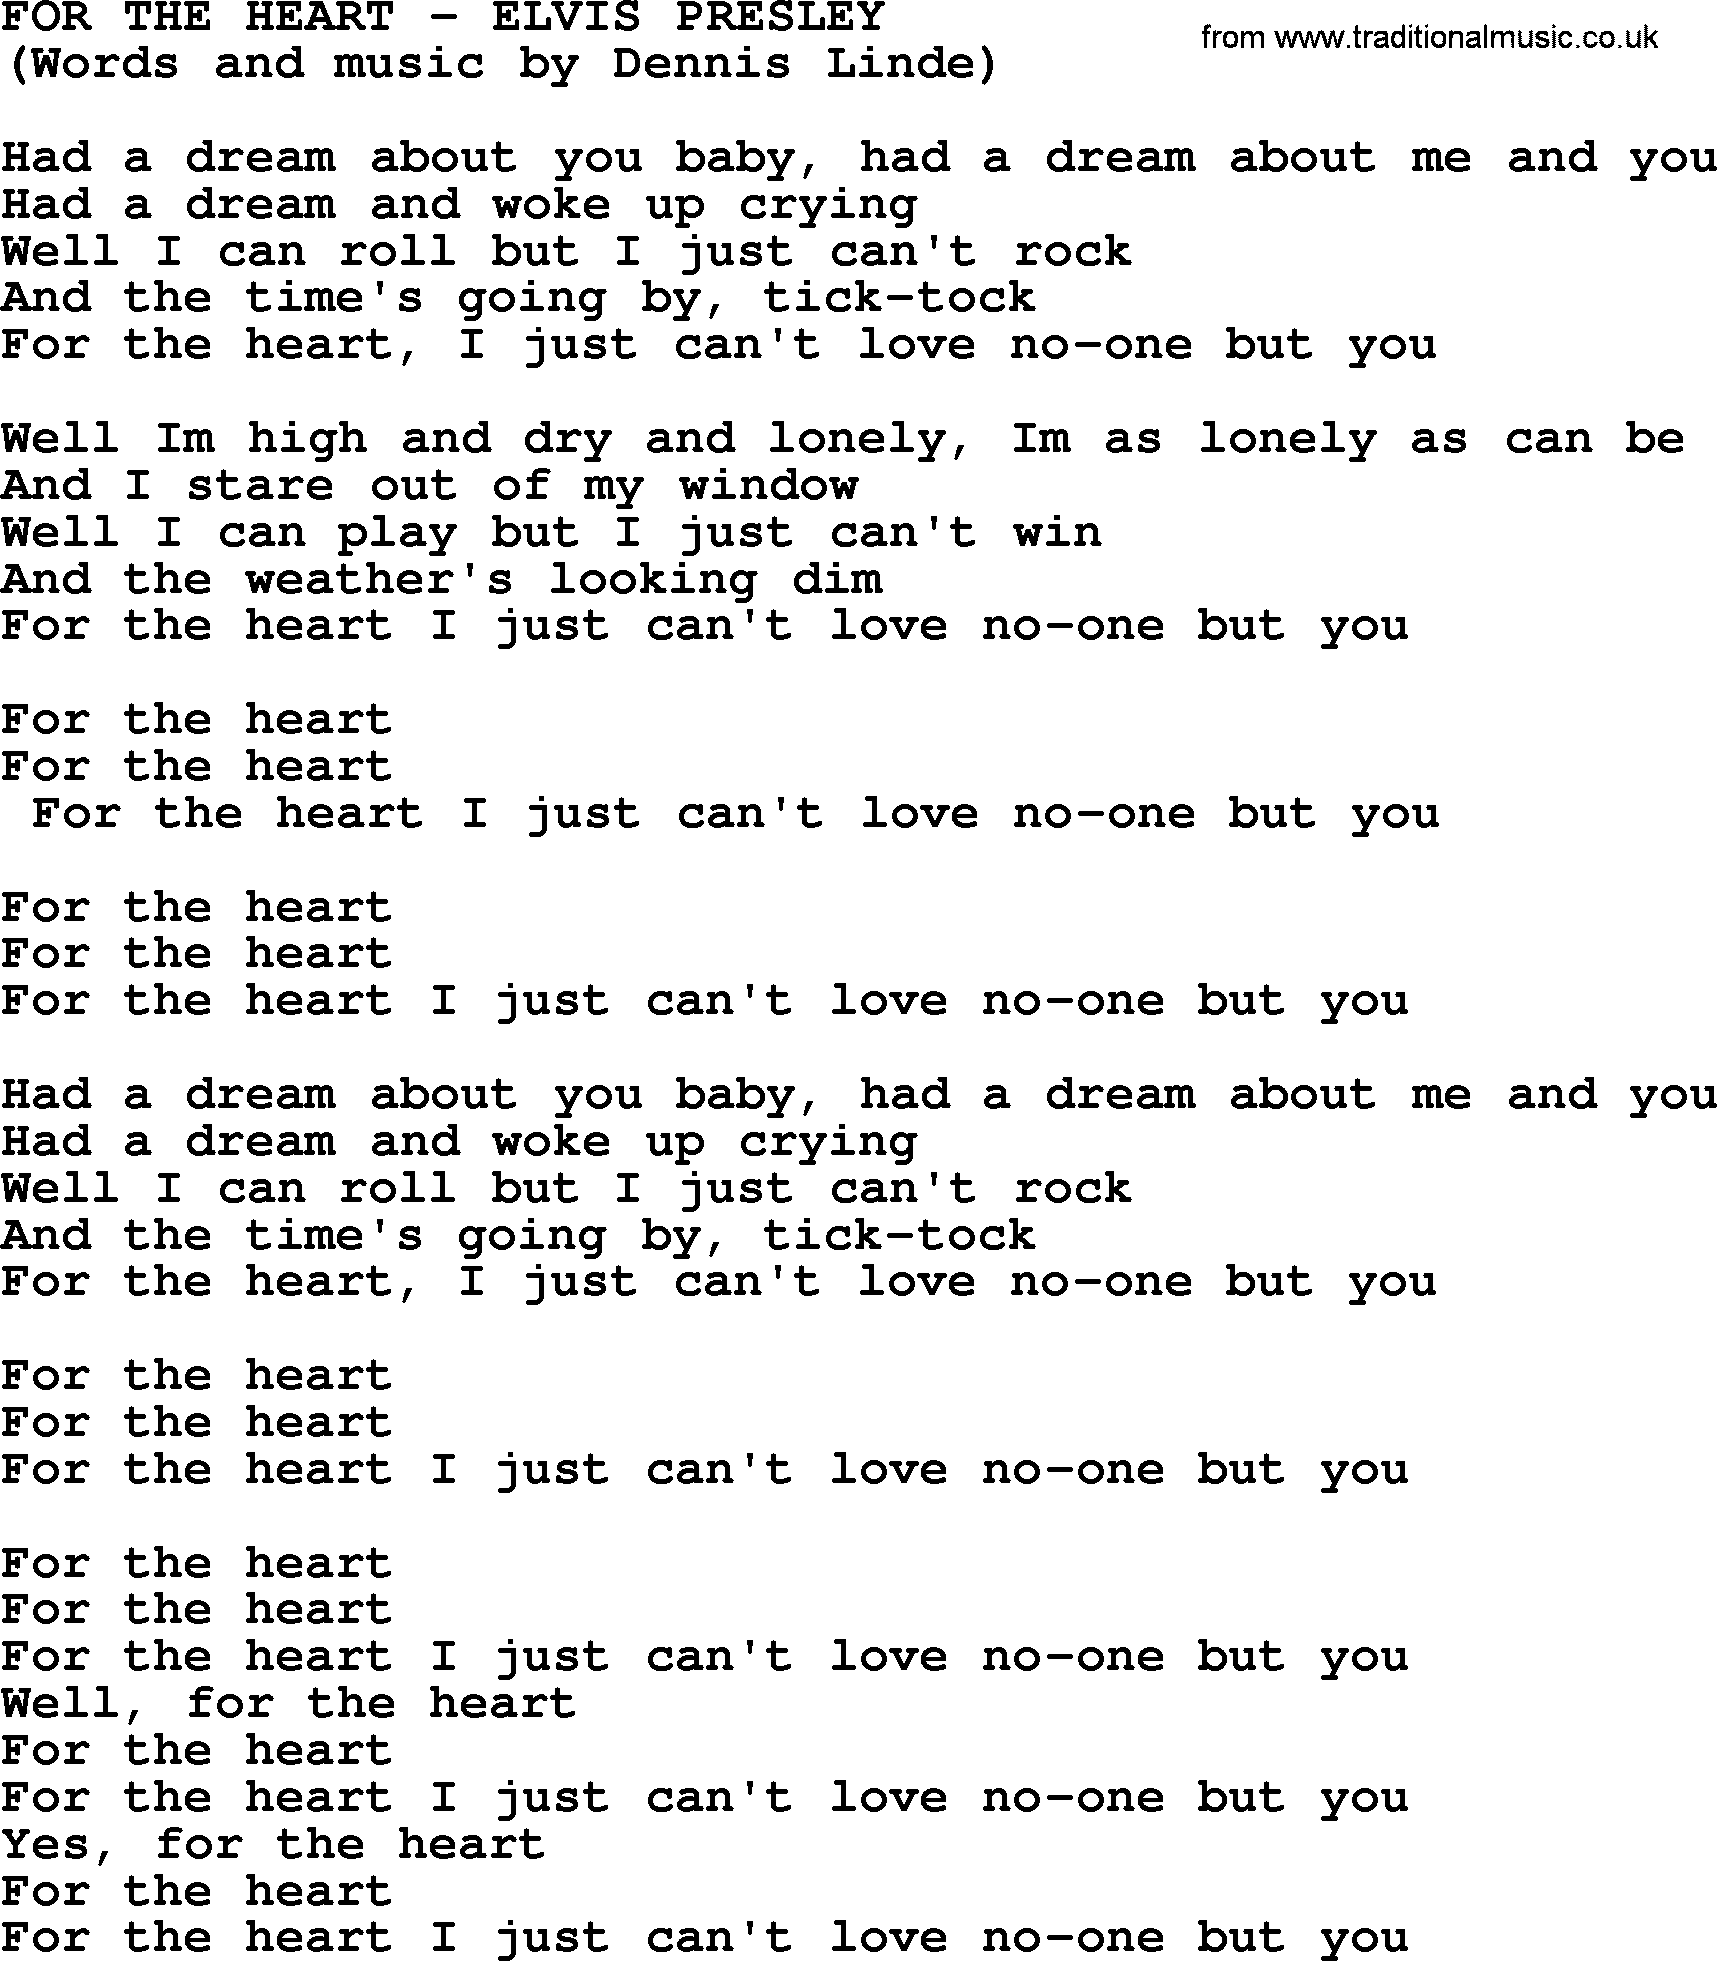 Elvis Presley song: For The Heart lyrics